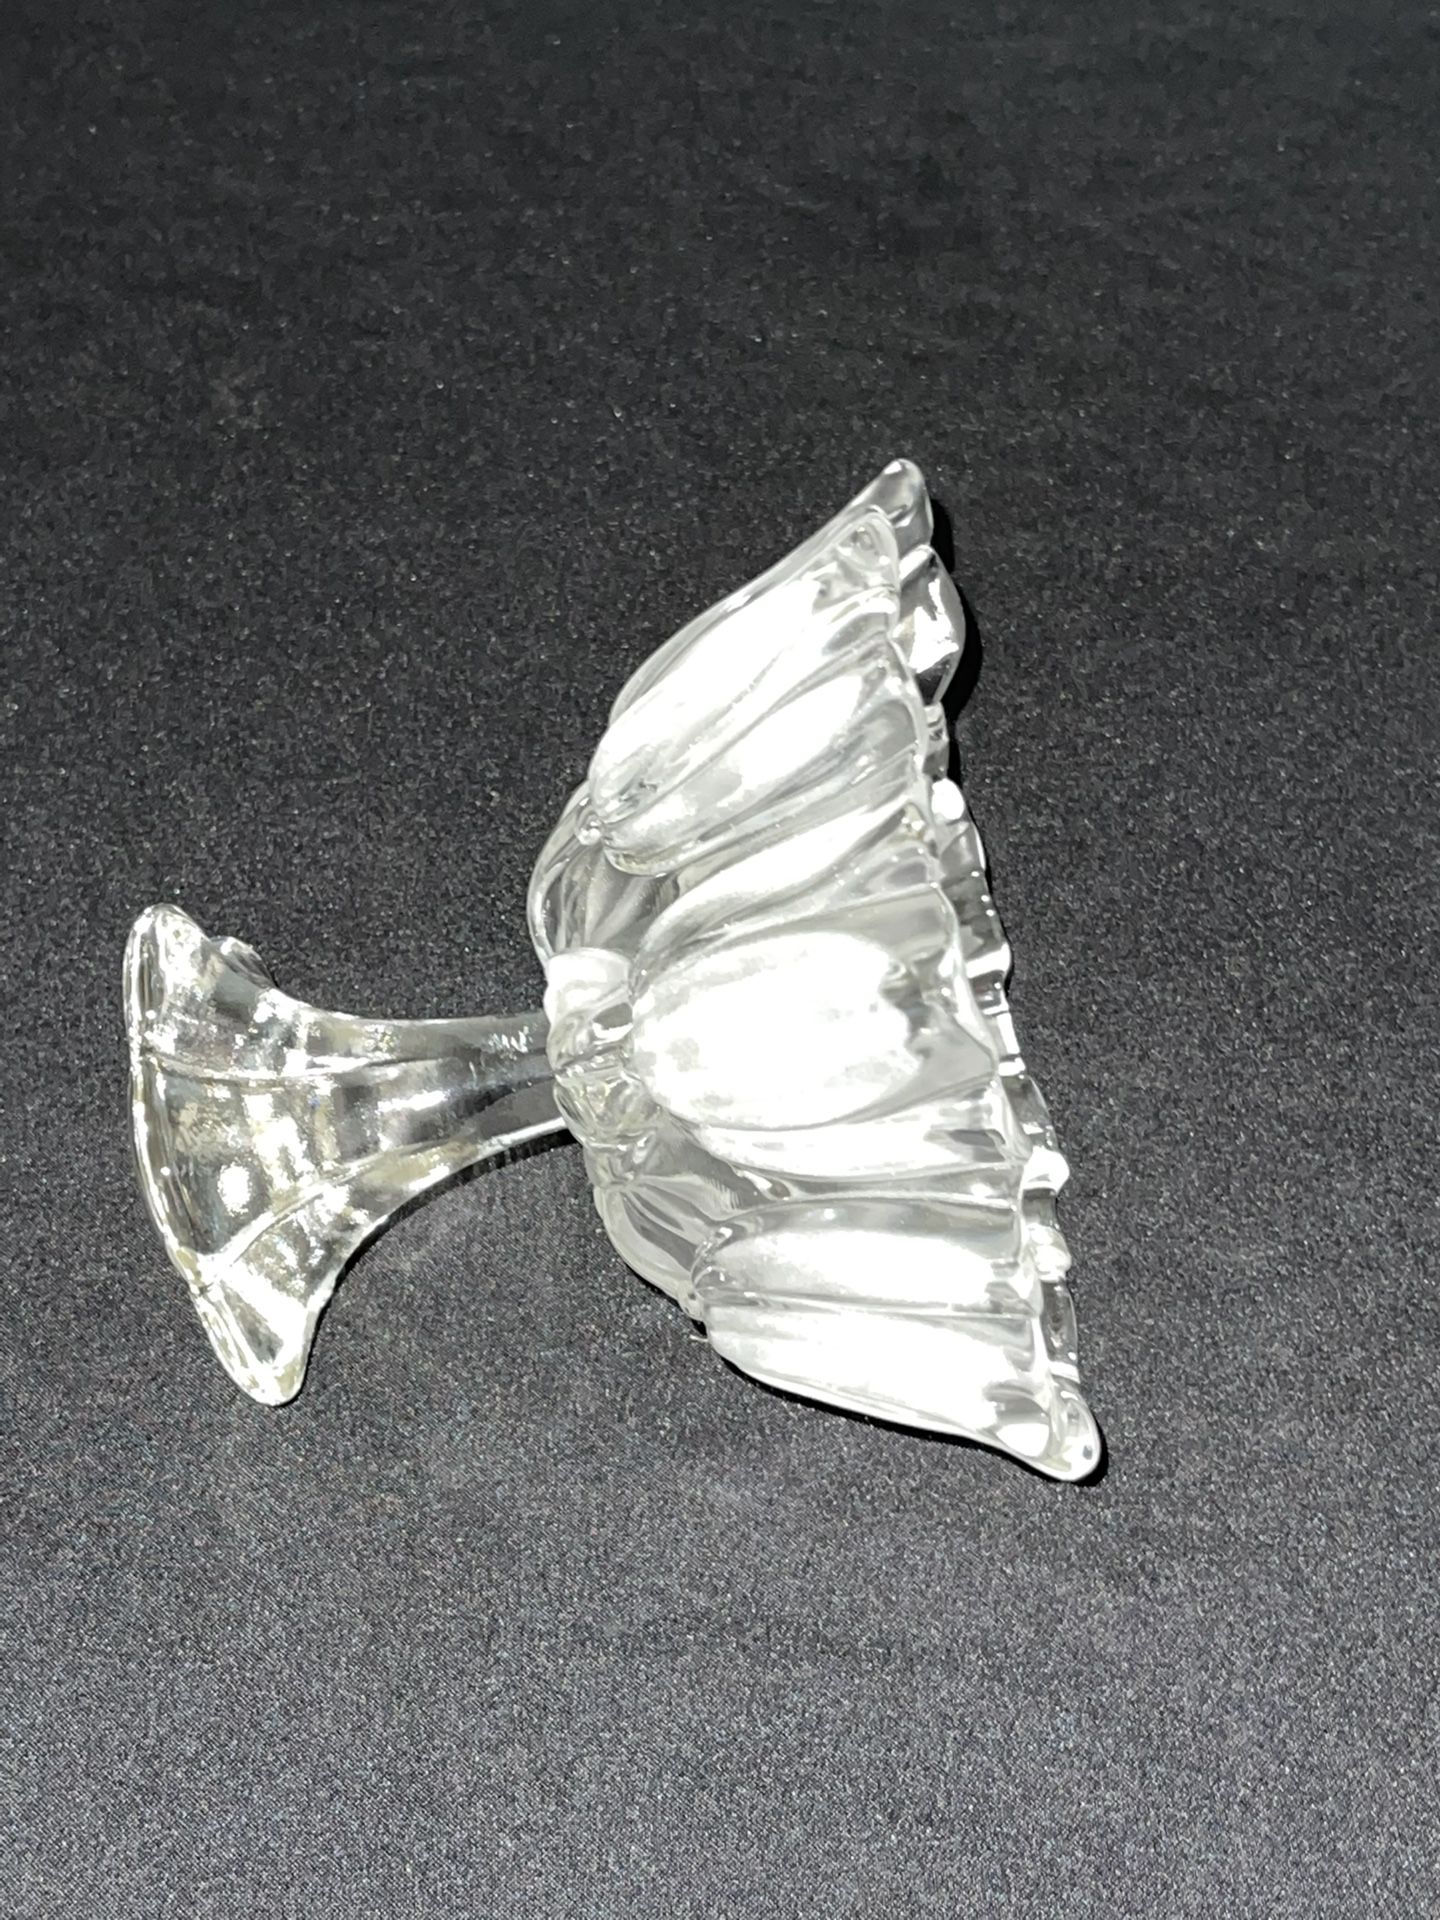 Wedding Items Crystal, Silver, Glass 